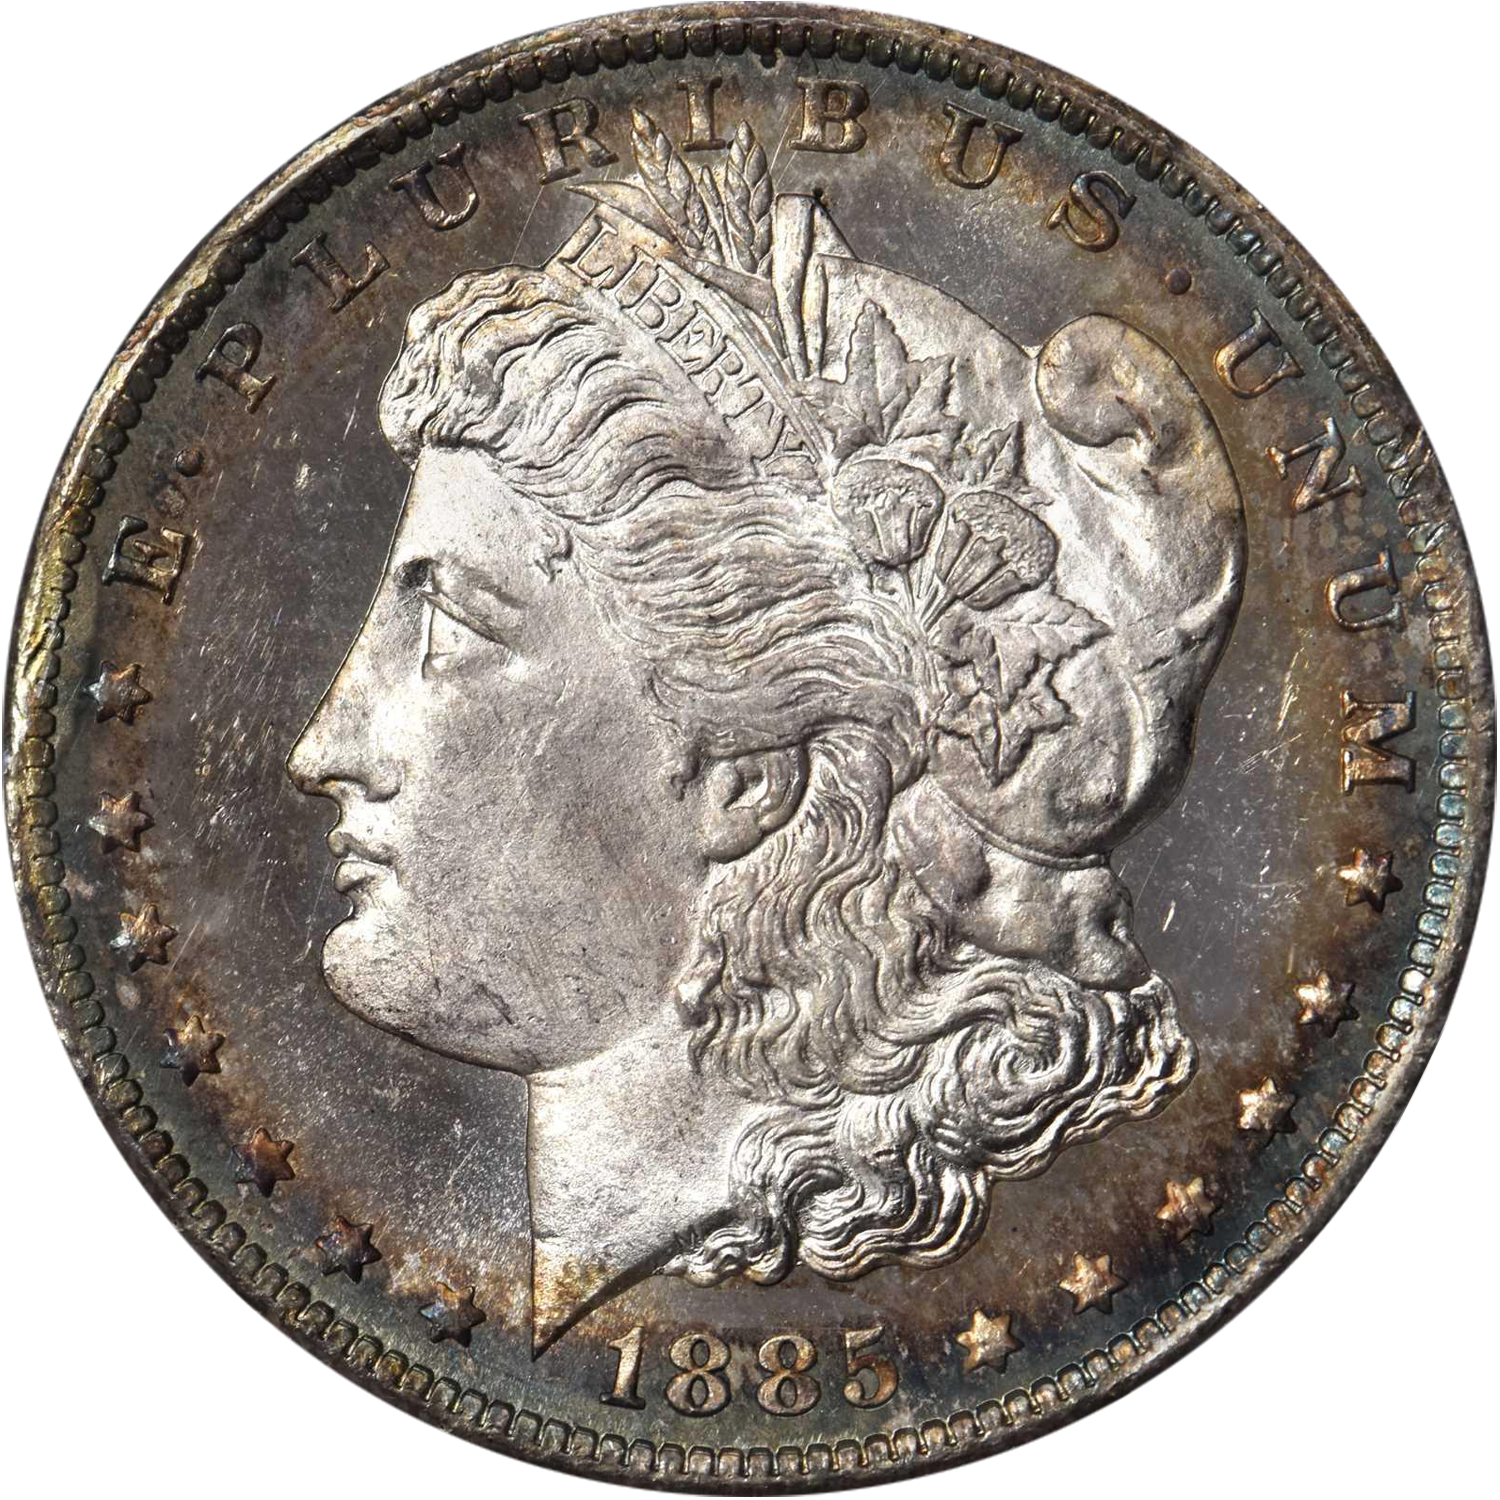 1885 cc morgan dollar value guide